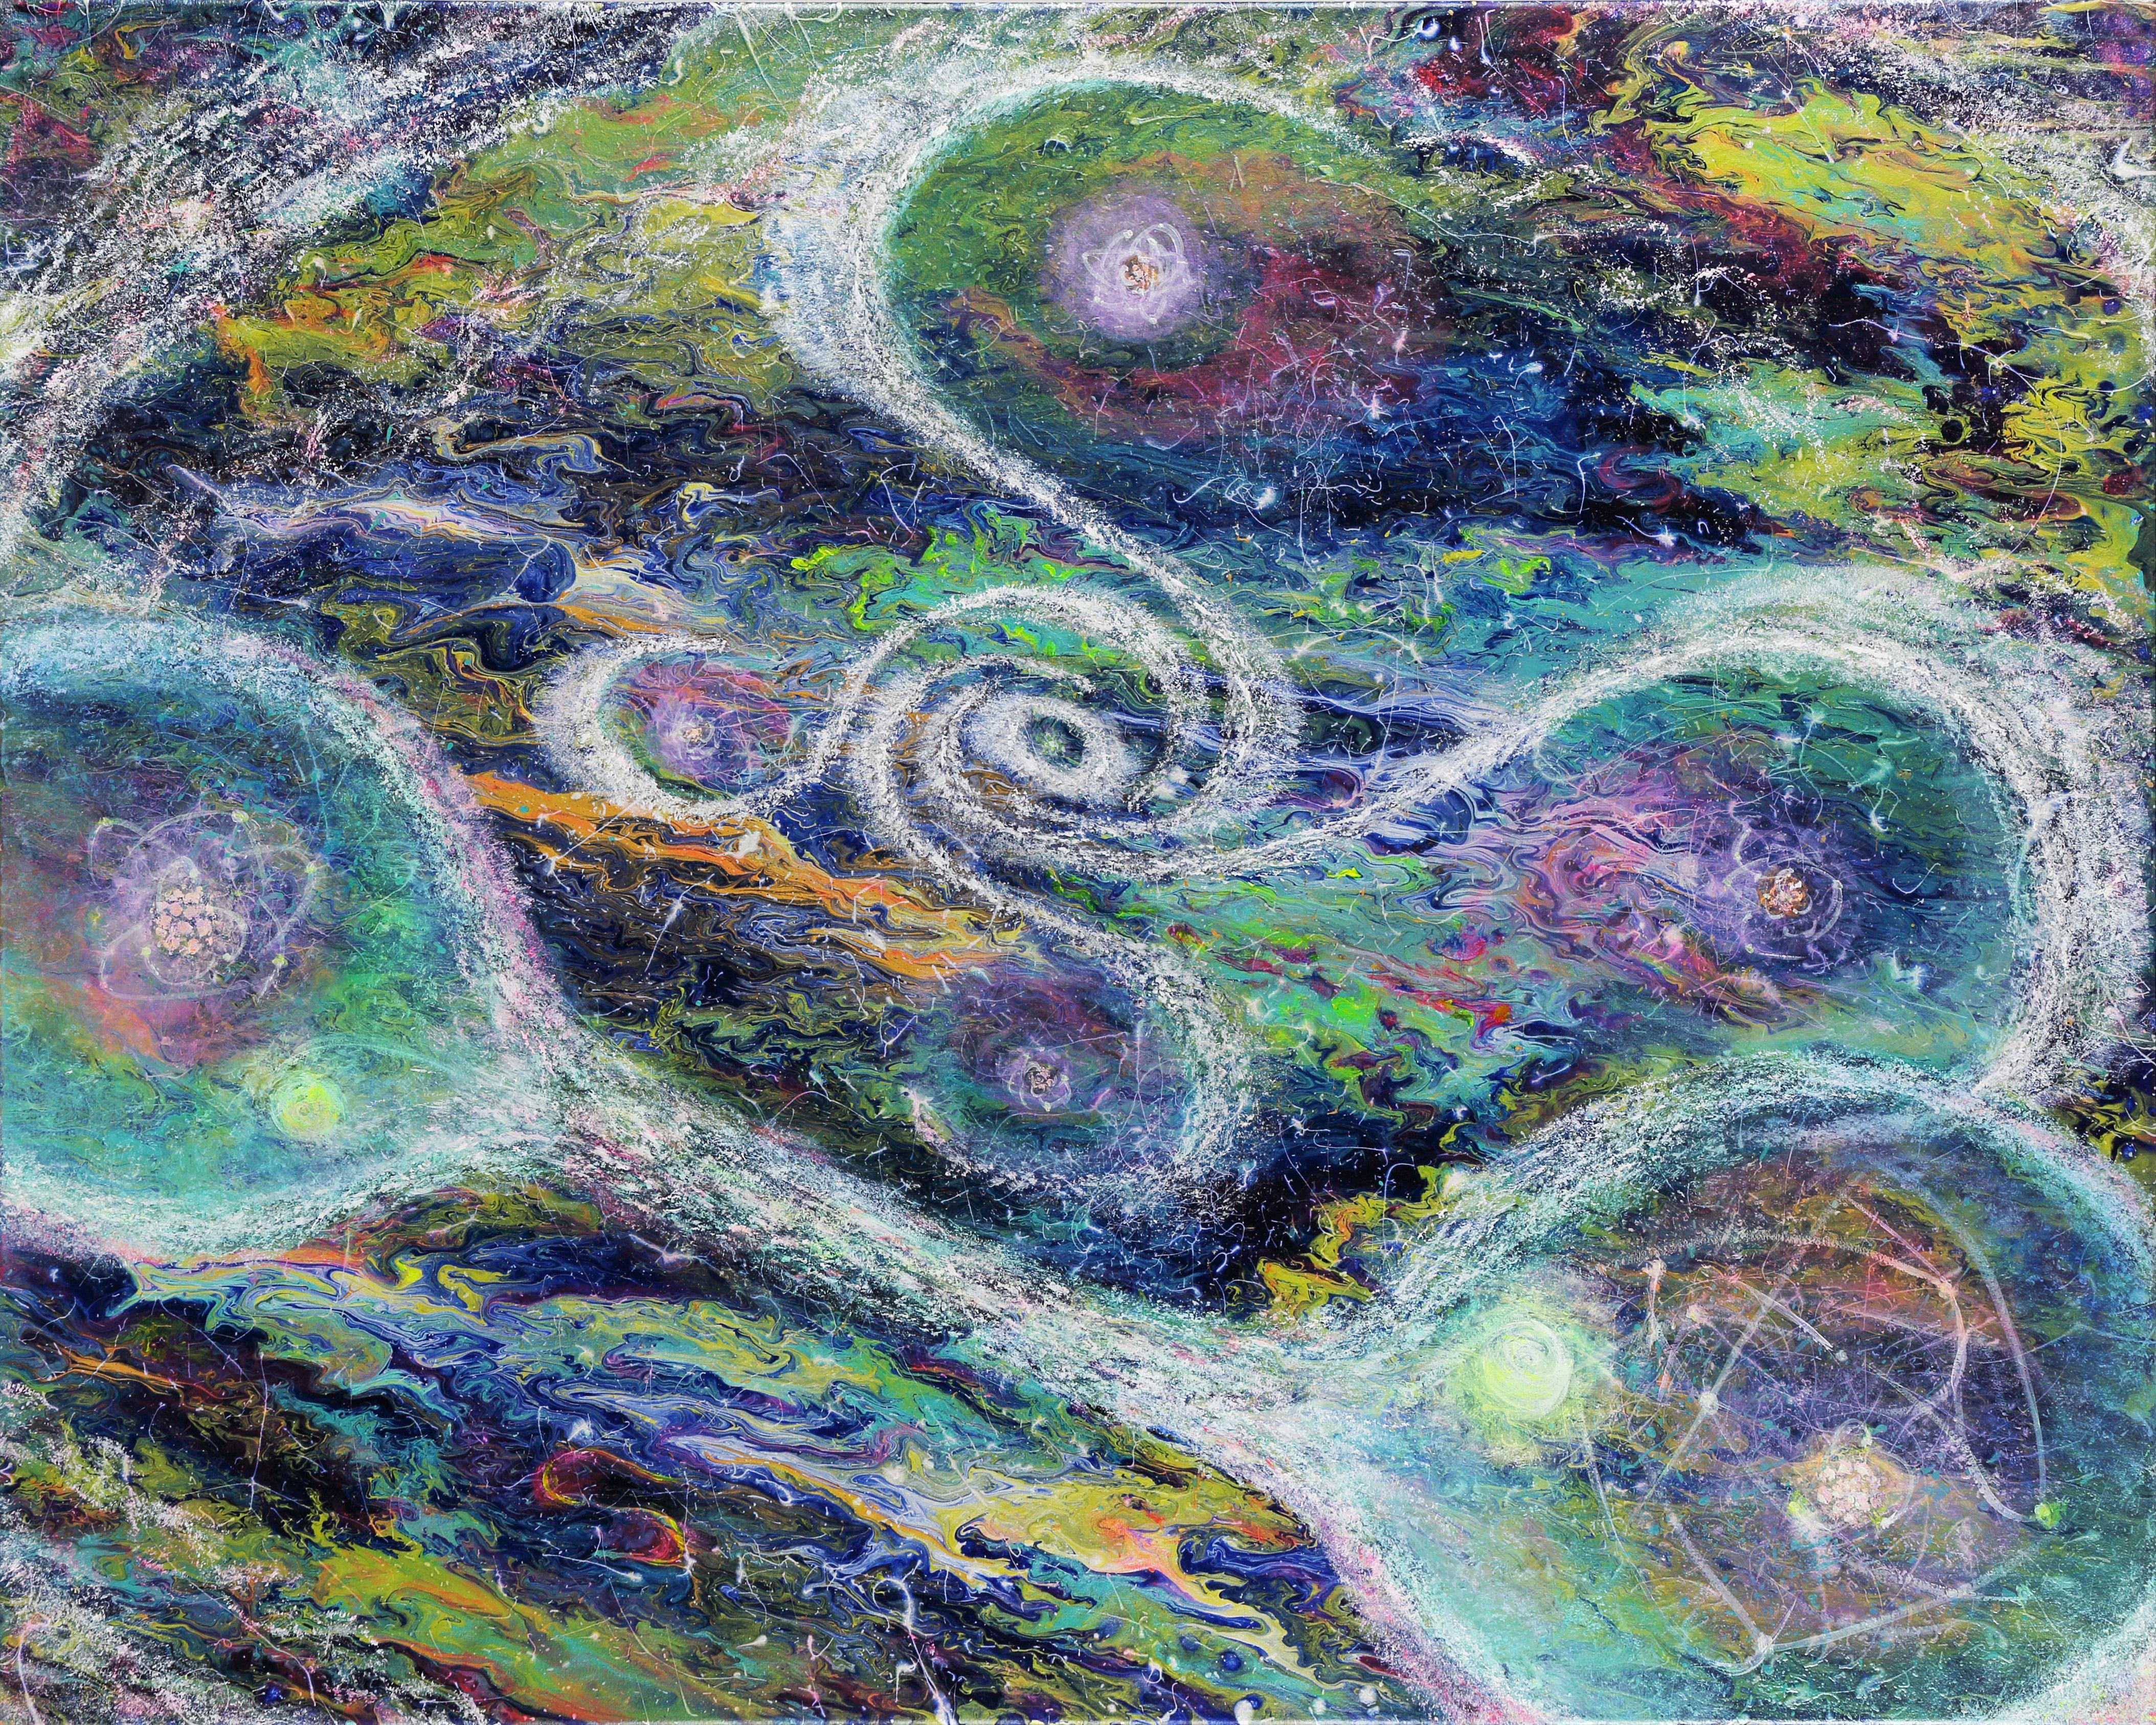 "Waltz of the Universe", “Metaphysics” series